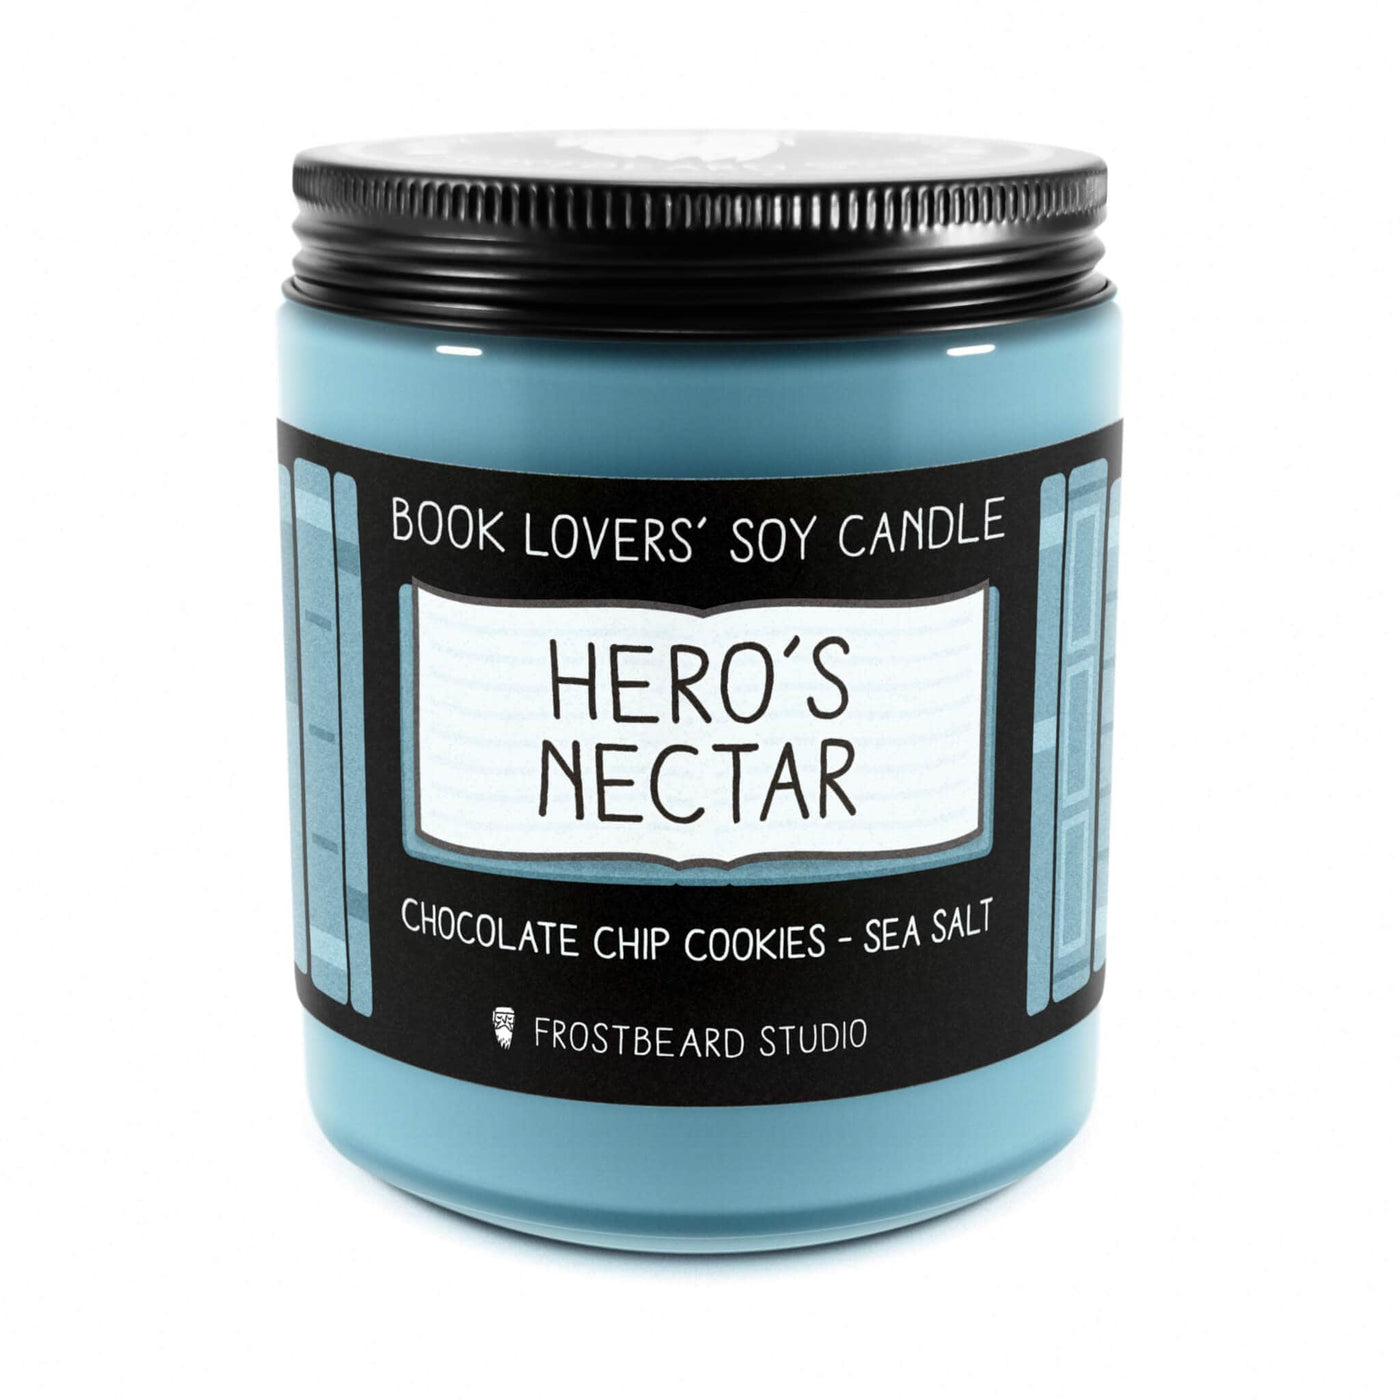 Hero's Nectar - 8 oz Jar - Book Lovers' Soy Candle - Frostbeard Studio